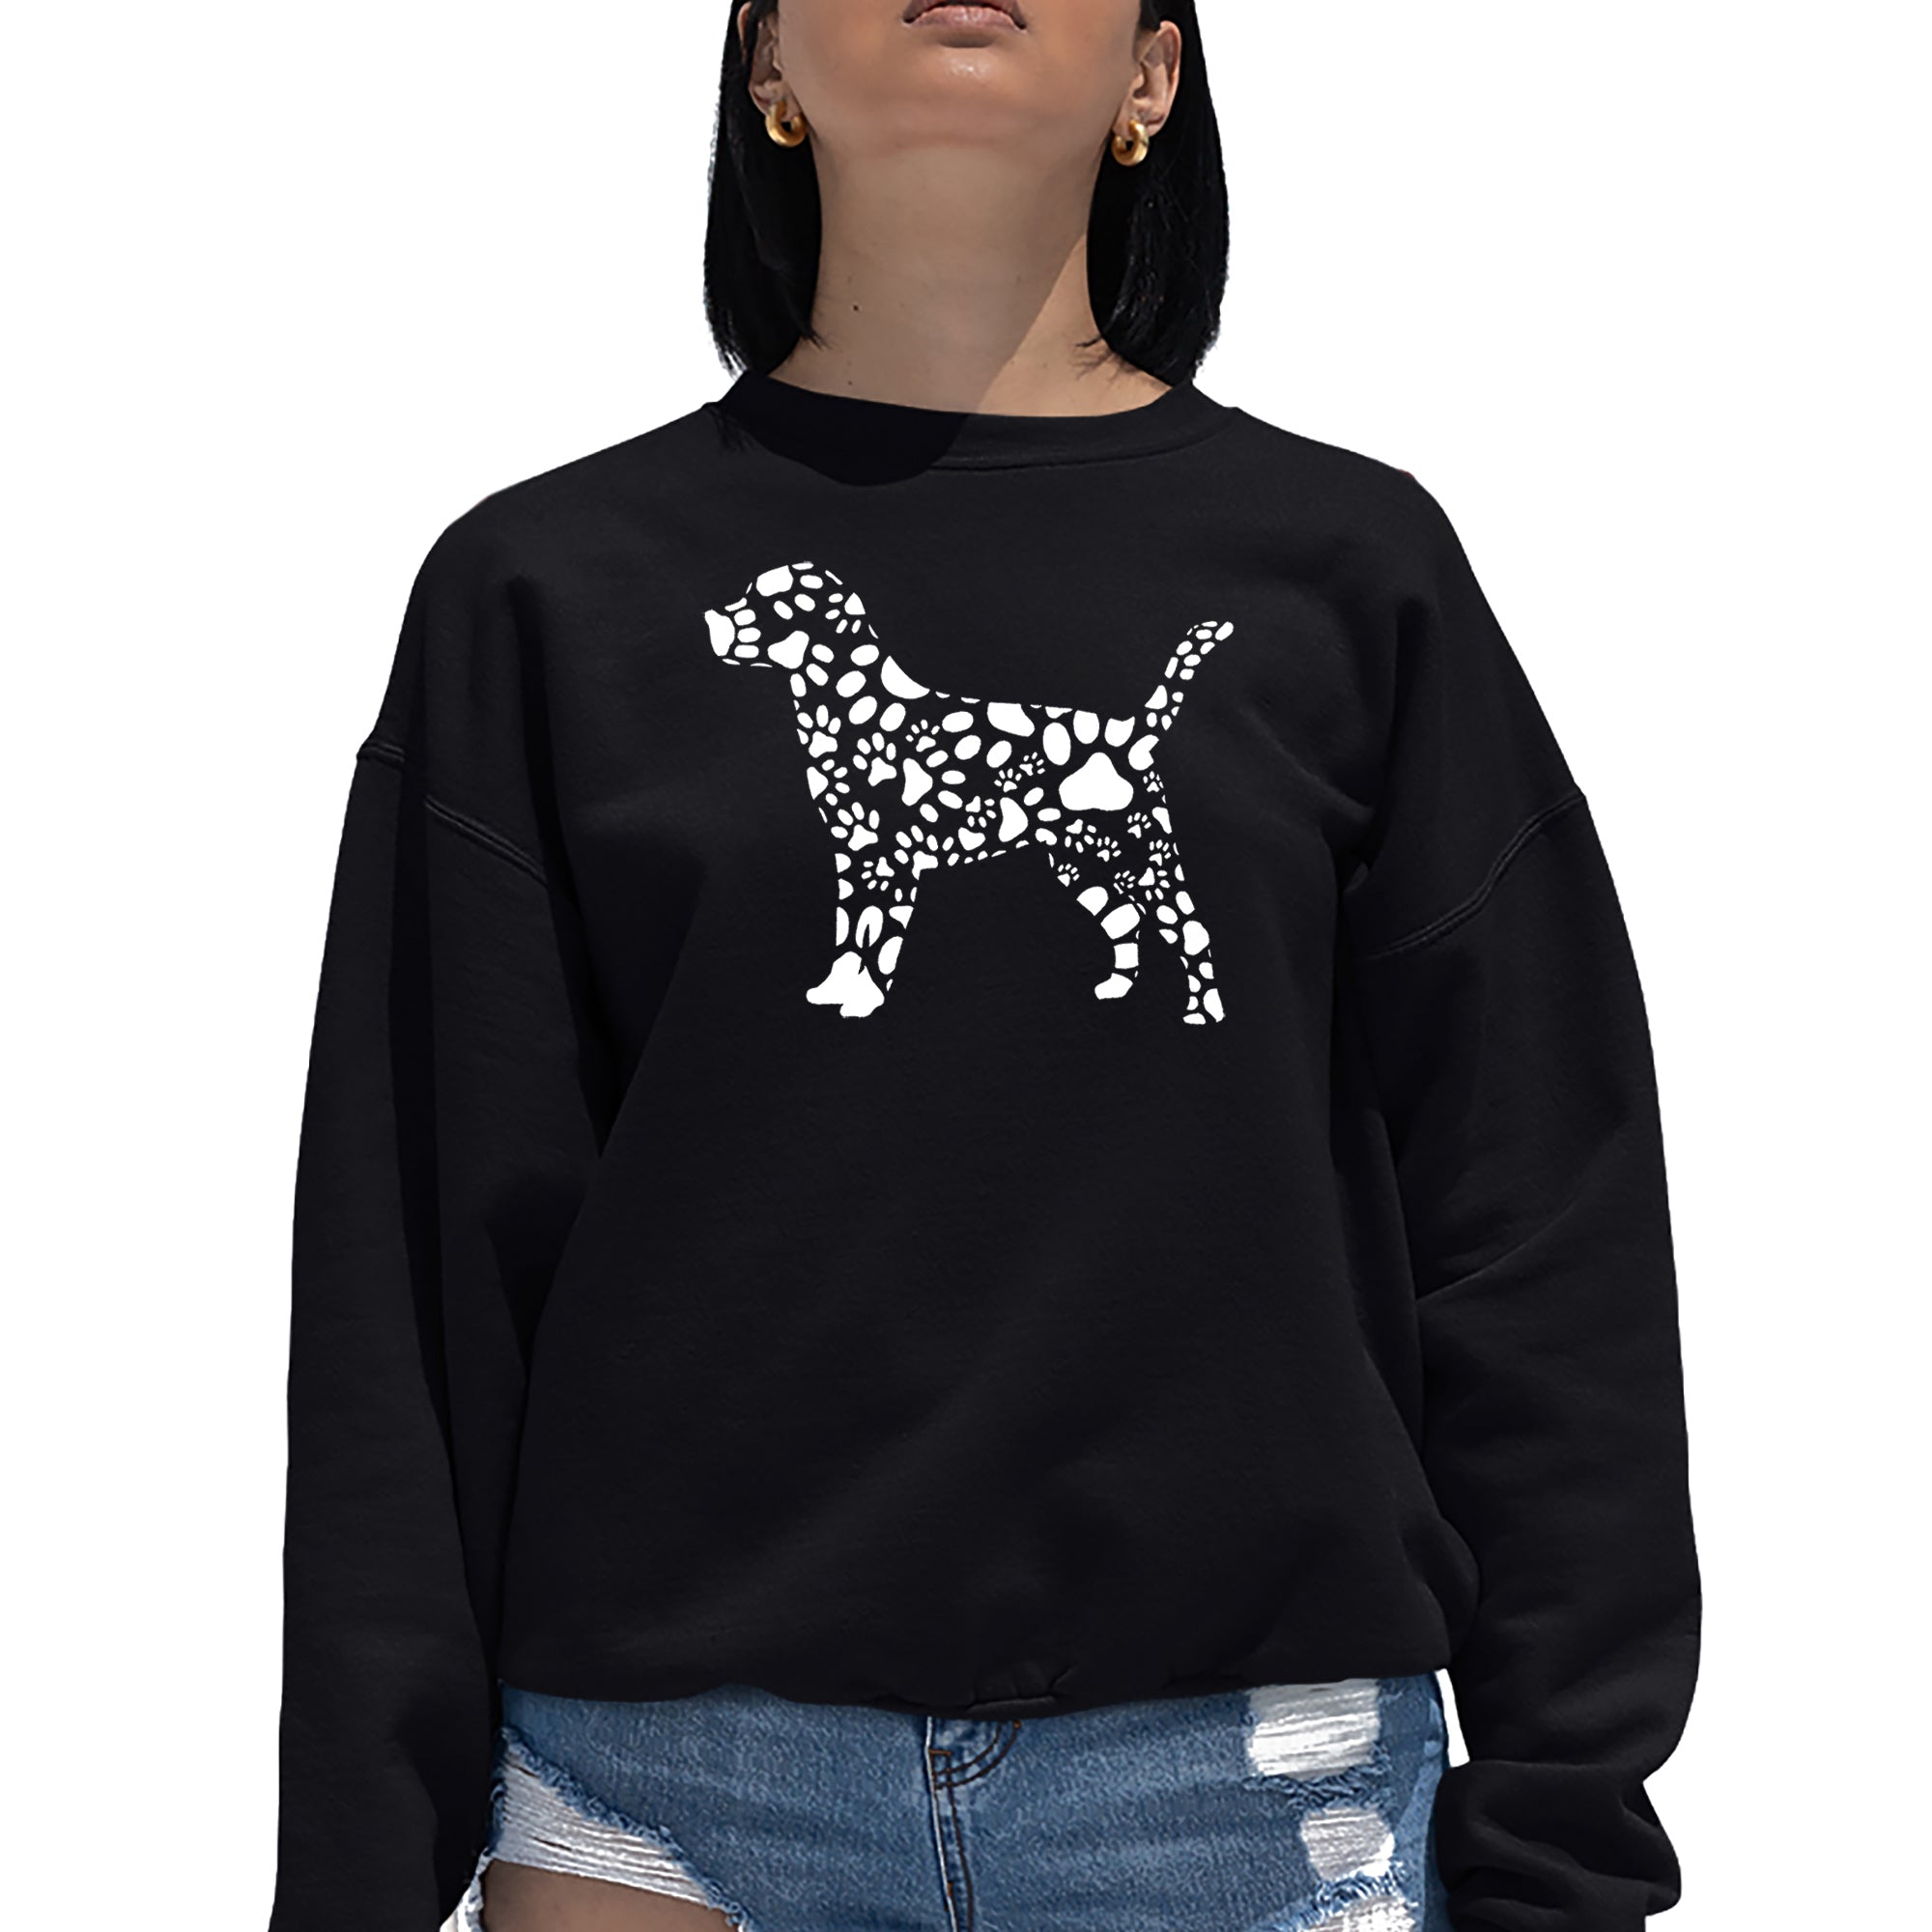 Dog Paw Prints - Women's Word Art Crewneck Sweatshirt - Black - X-Large